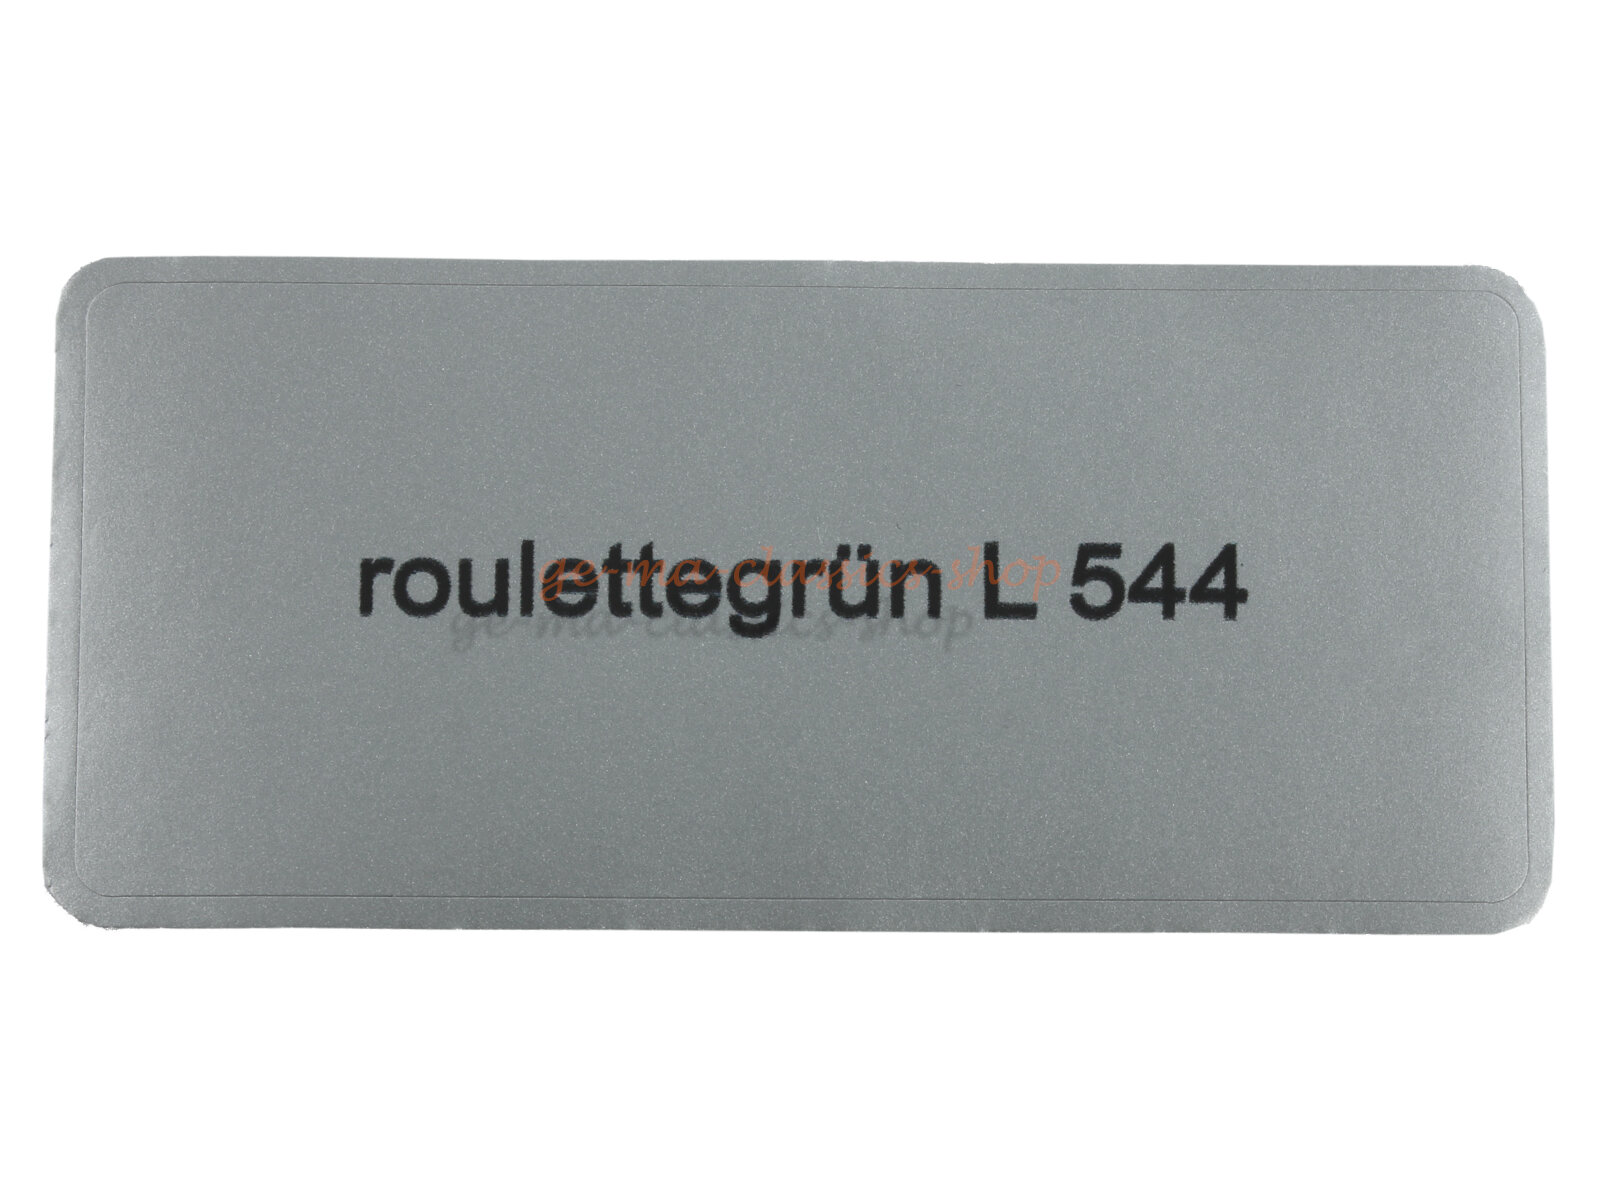 Aufkleber "roulettegrün L 544" Farbcode Sticker